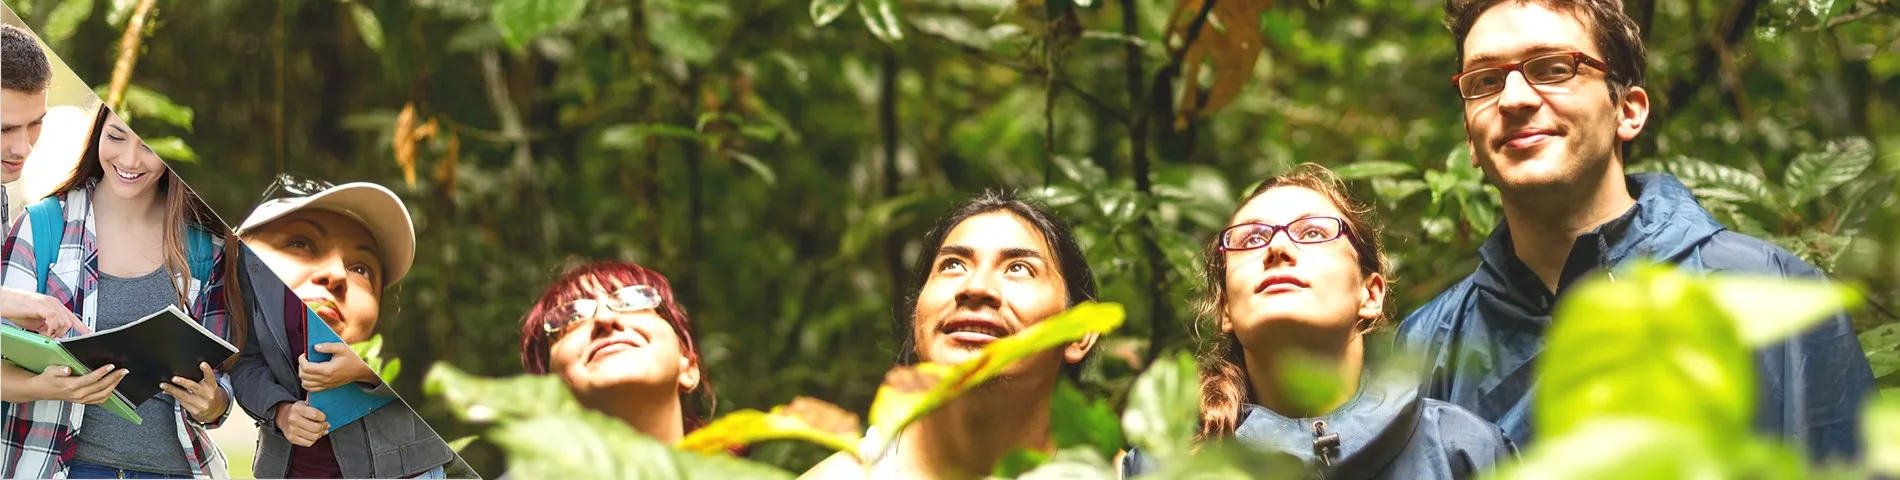 Amazon Jungle - Aula itinerante